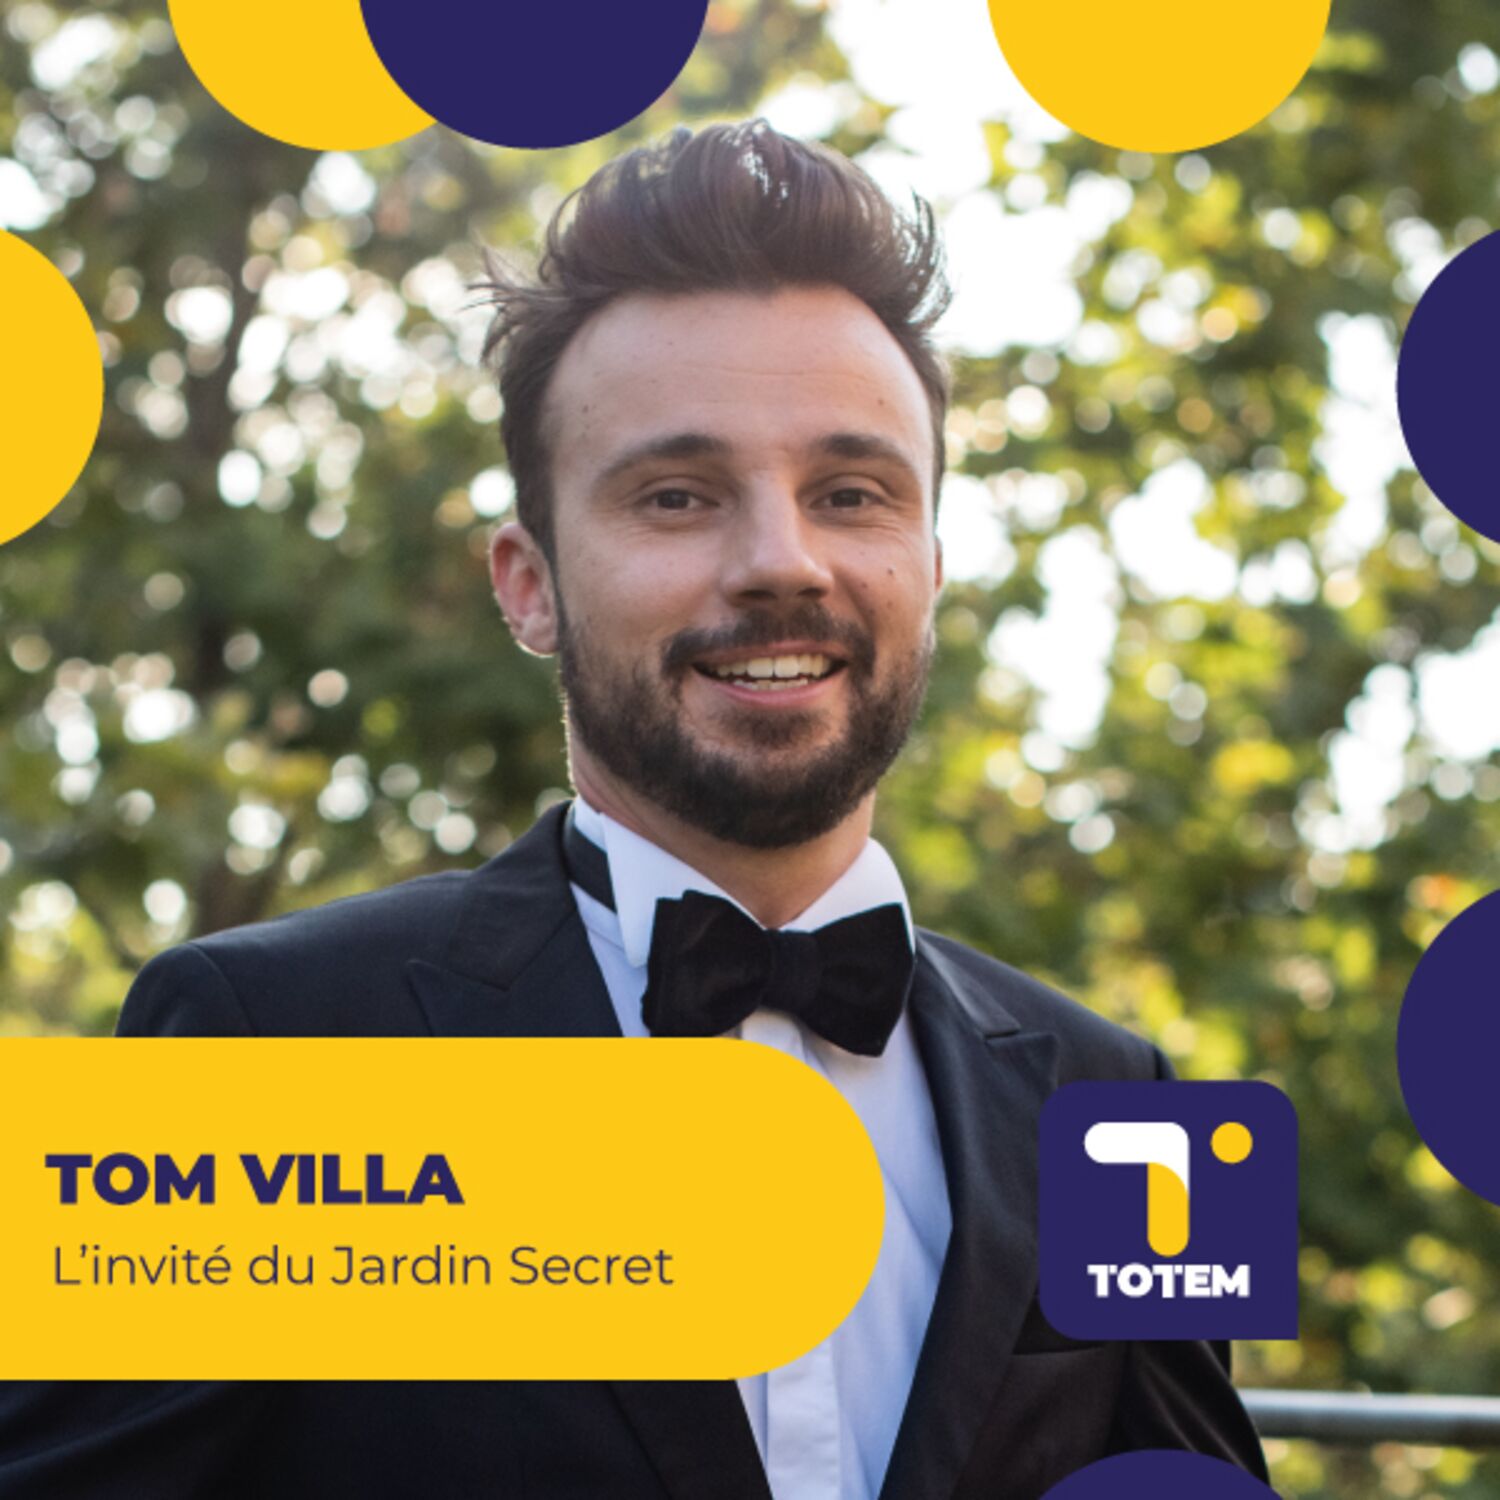 Tom Villa et son rêve secret de devenir artiste